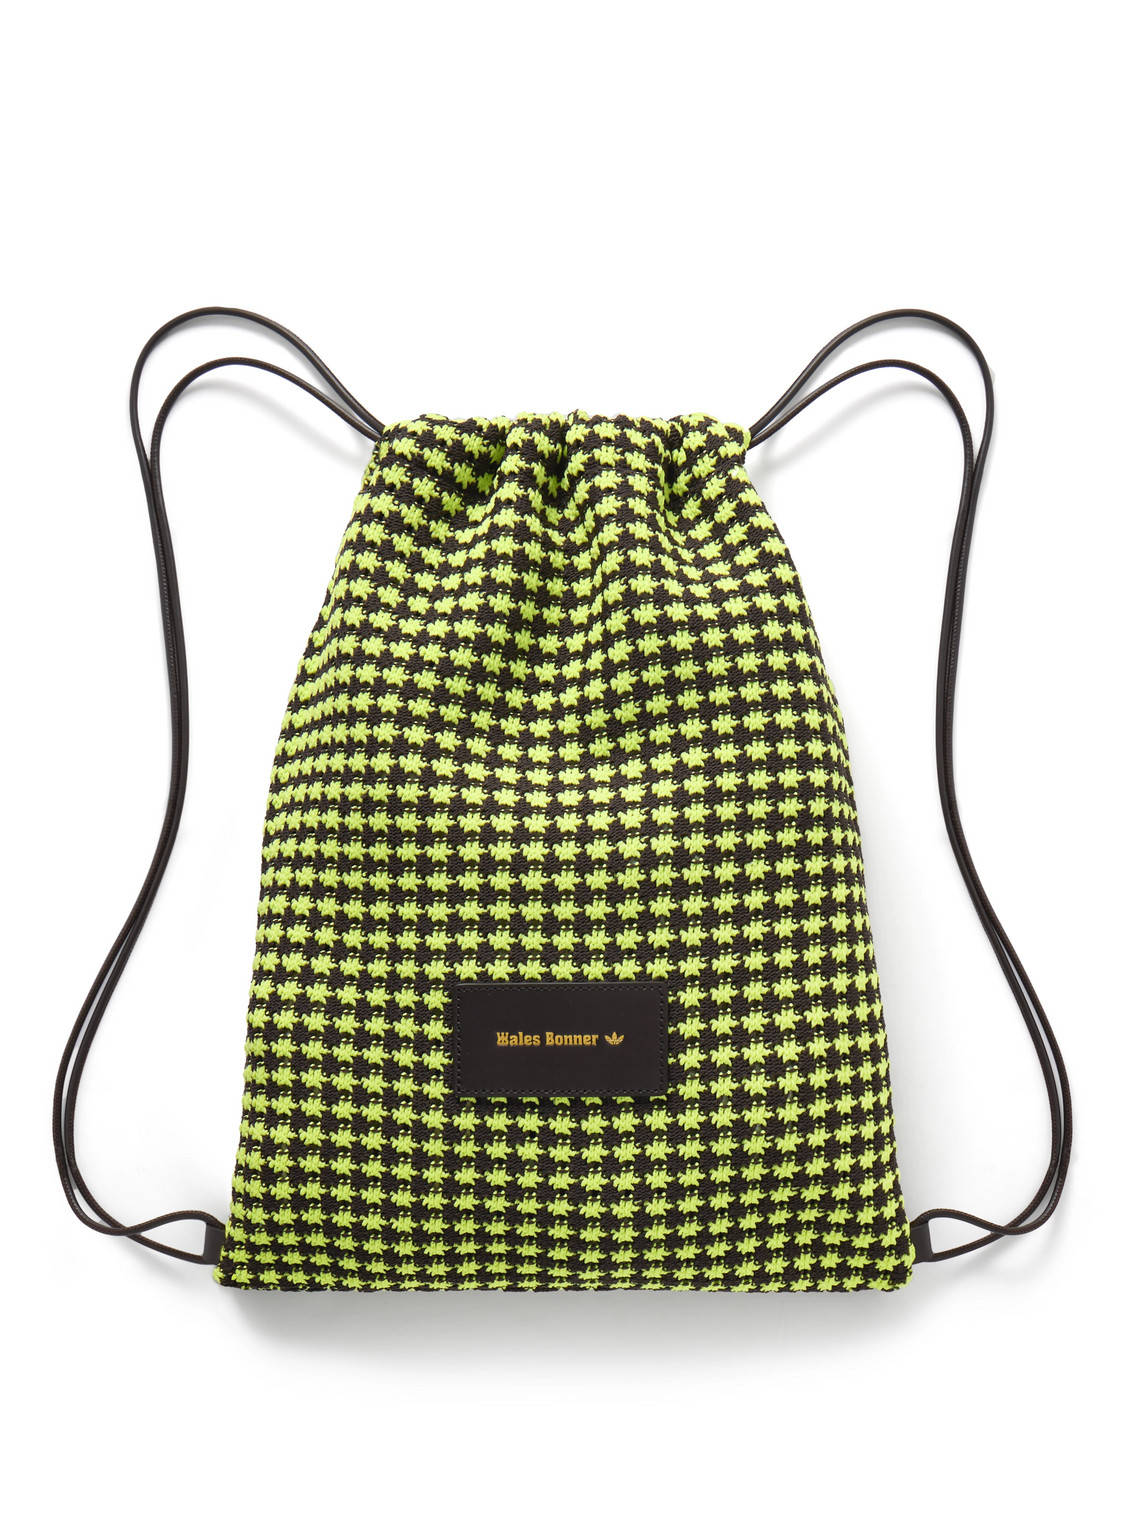 adidas Originals - Wales Bonner Faux Leather-Trimmed Crocheted Drawstring Backpack - Men - Green von adidas Originals